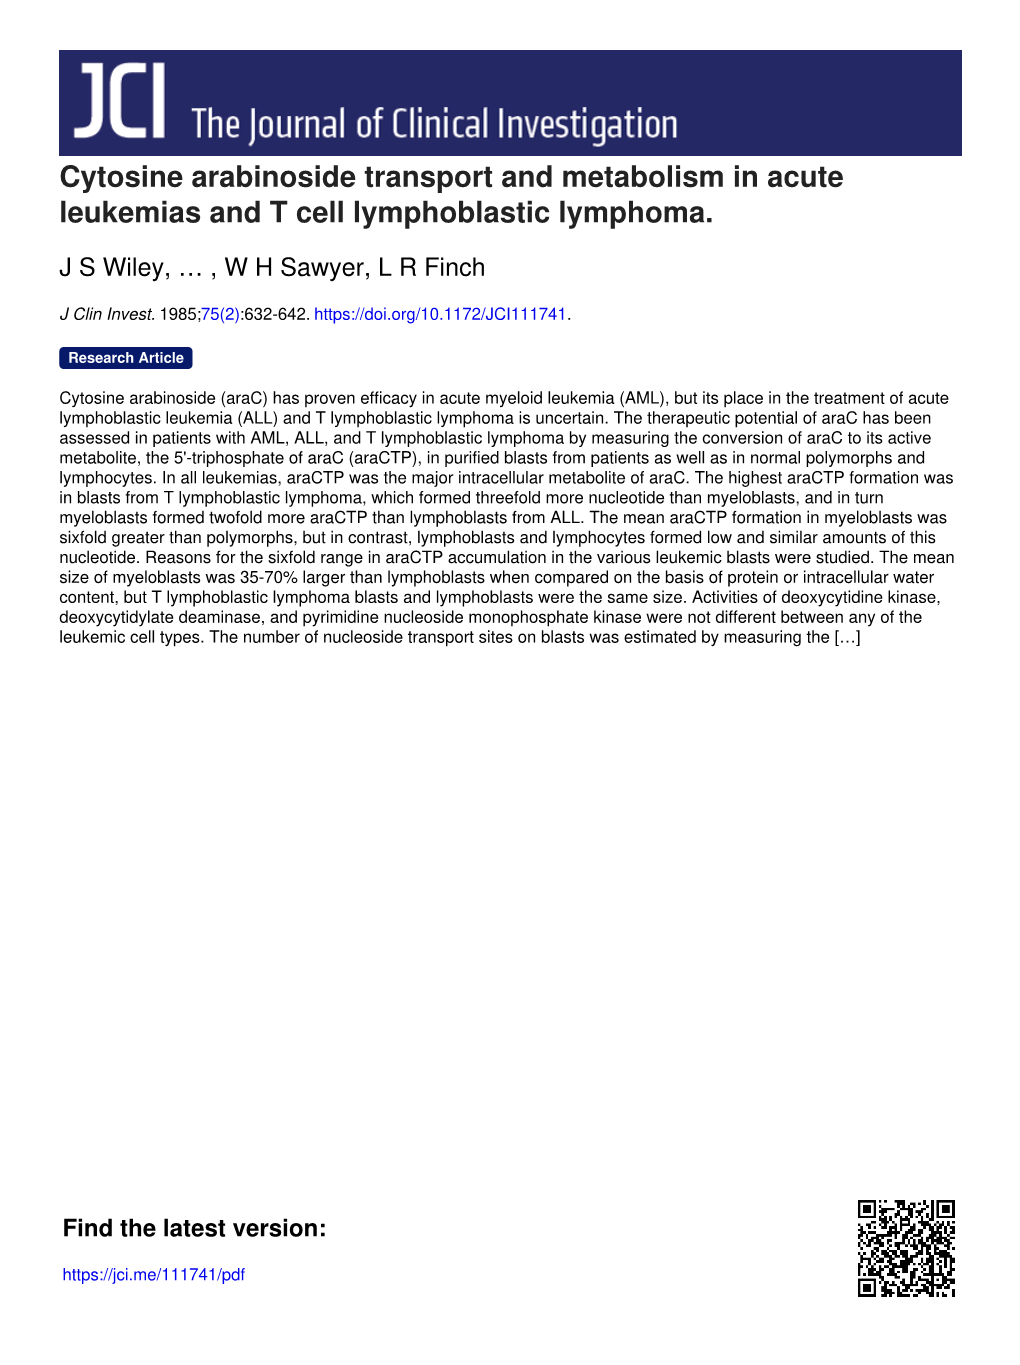 Cytosine Arabinoside Transport and Metabolism in Acute Leukemias and T Cell Lymphoblastic Lymphoma